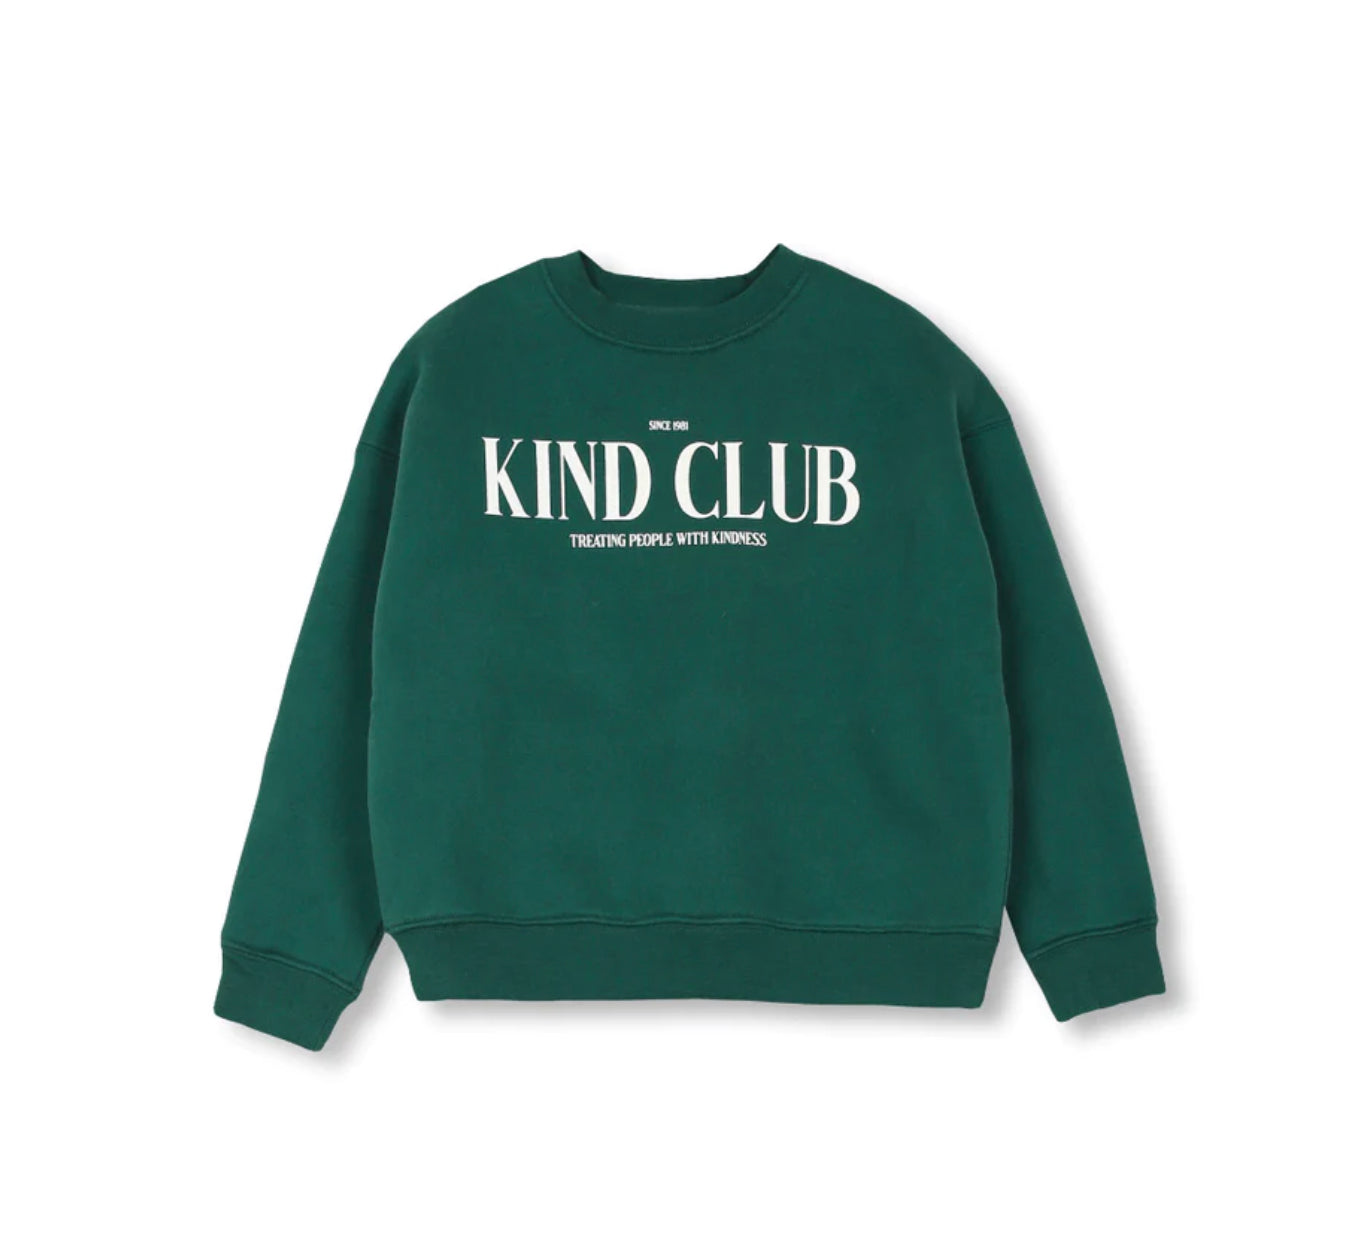 Brunette The Label l Kind Club l Emerald